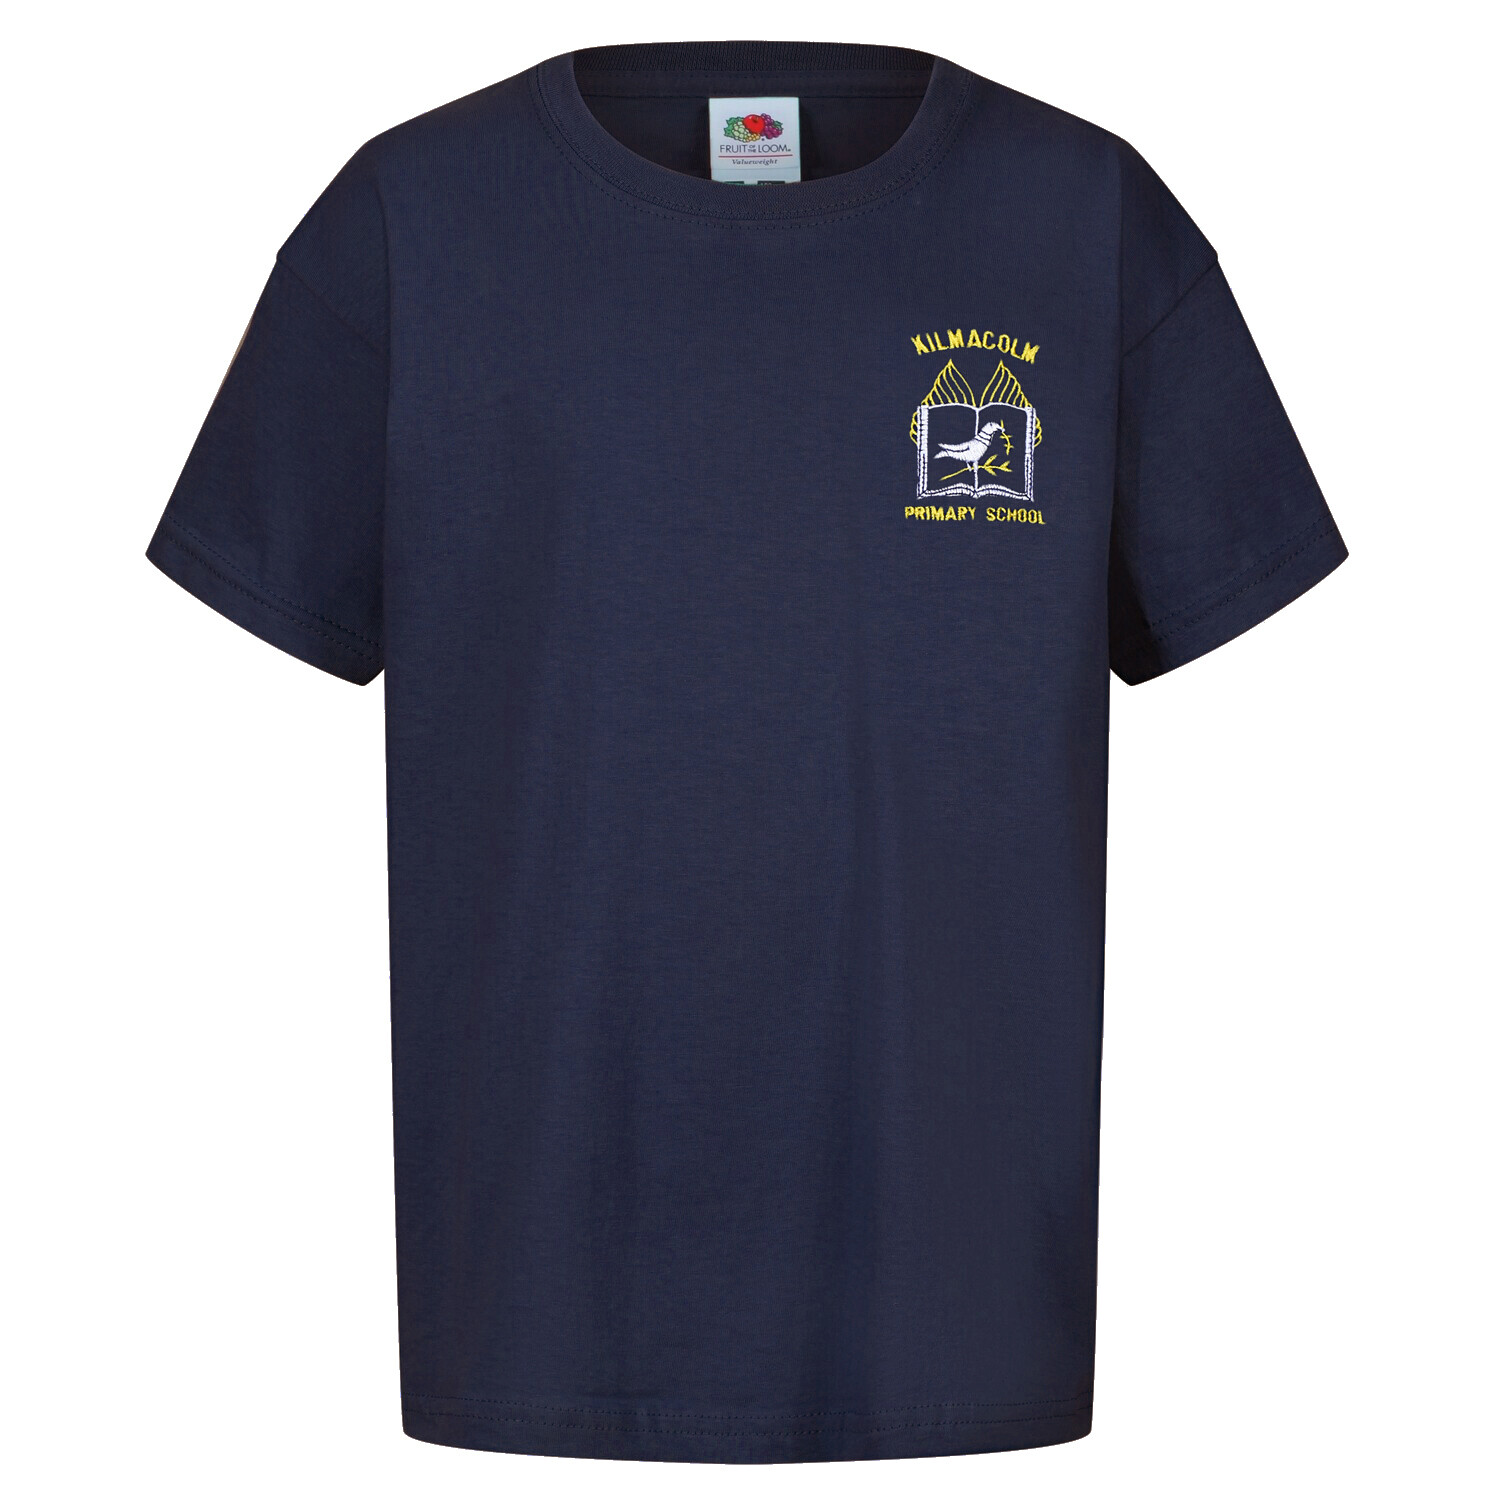 Kilmacolm Primary Staff T-Shirt (Unisex) (RCS5000)